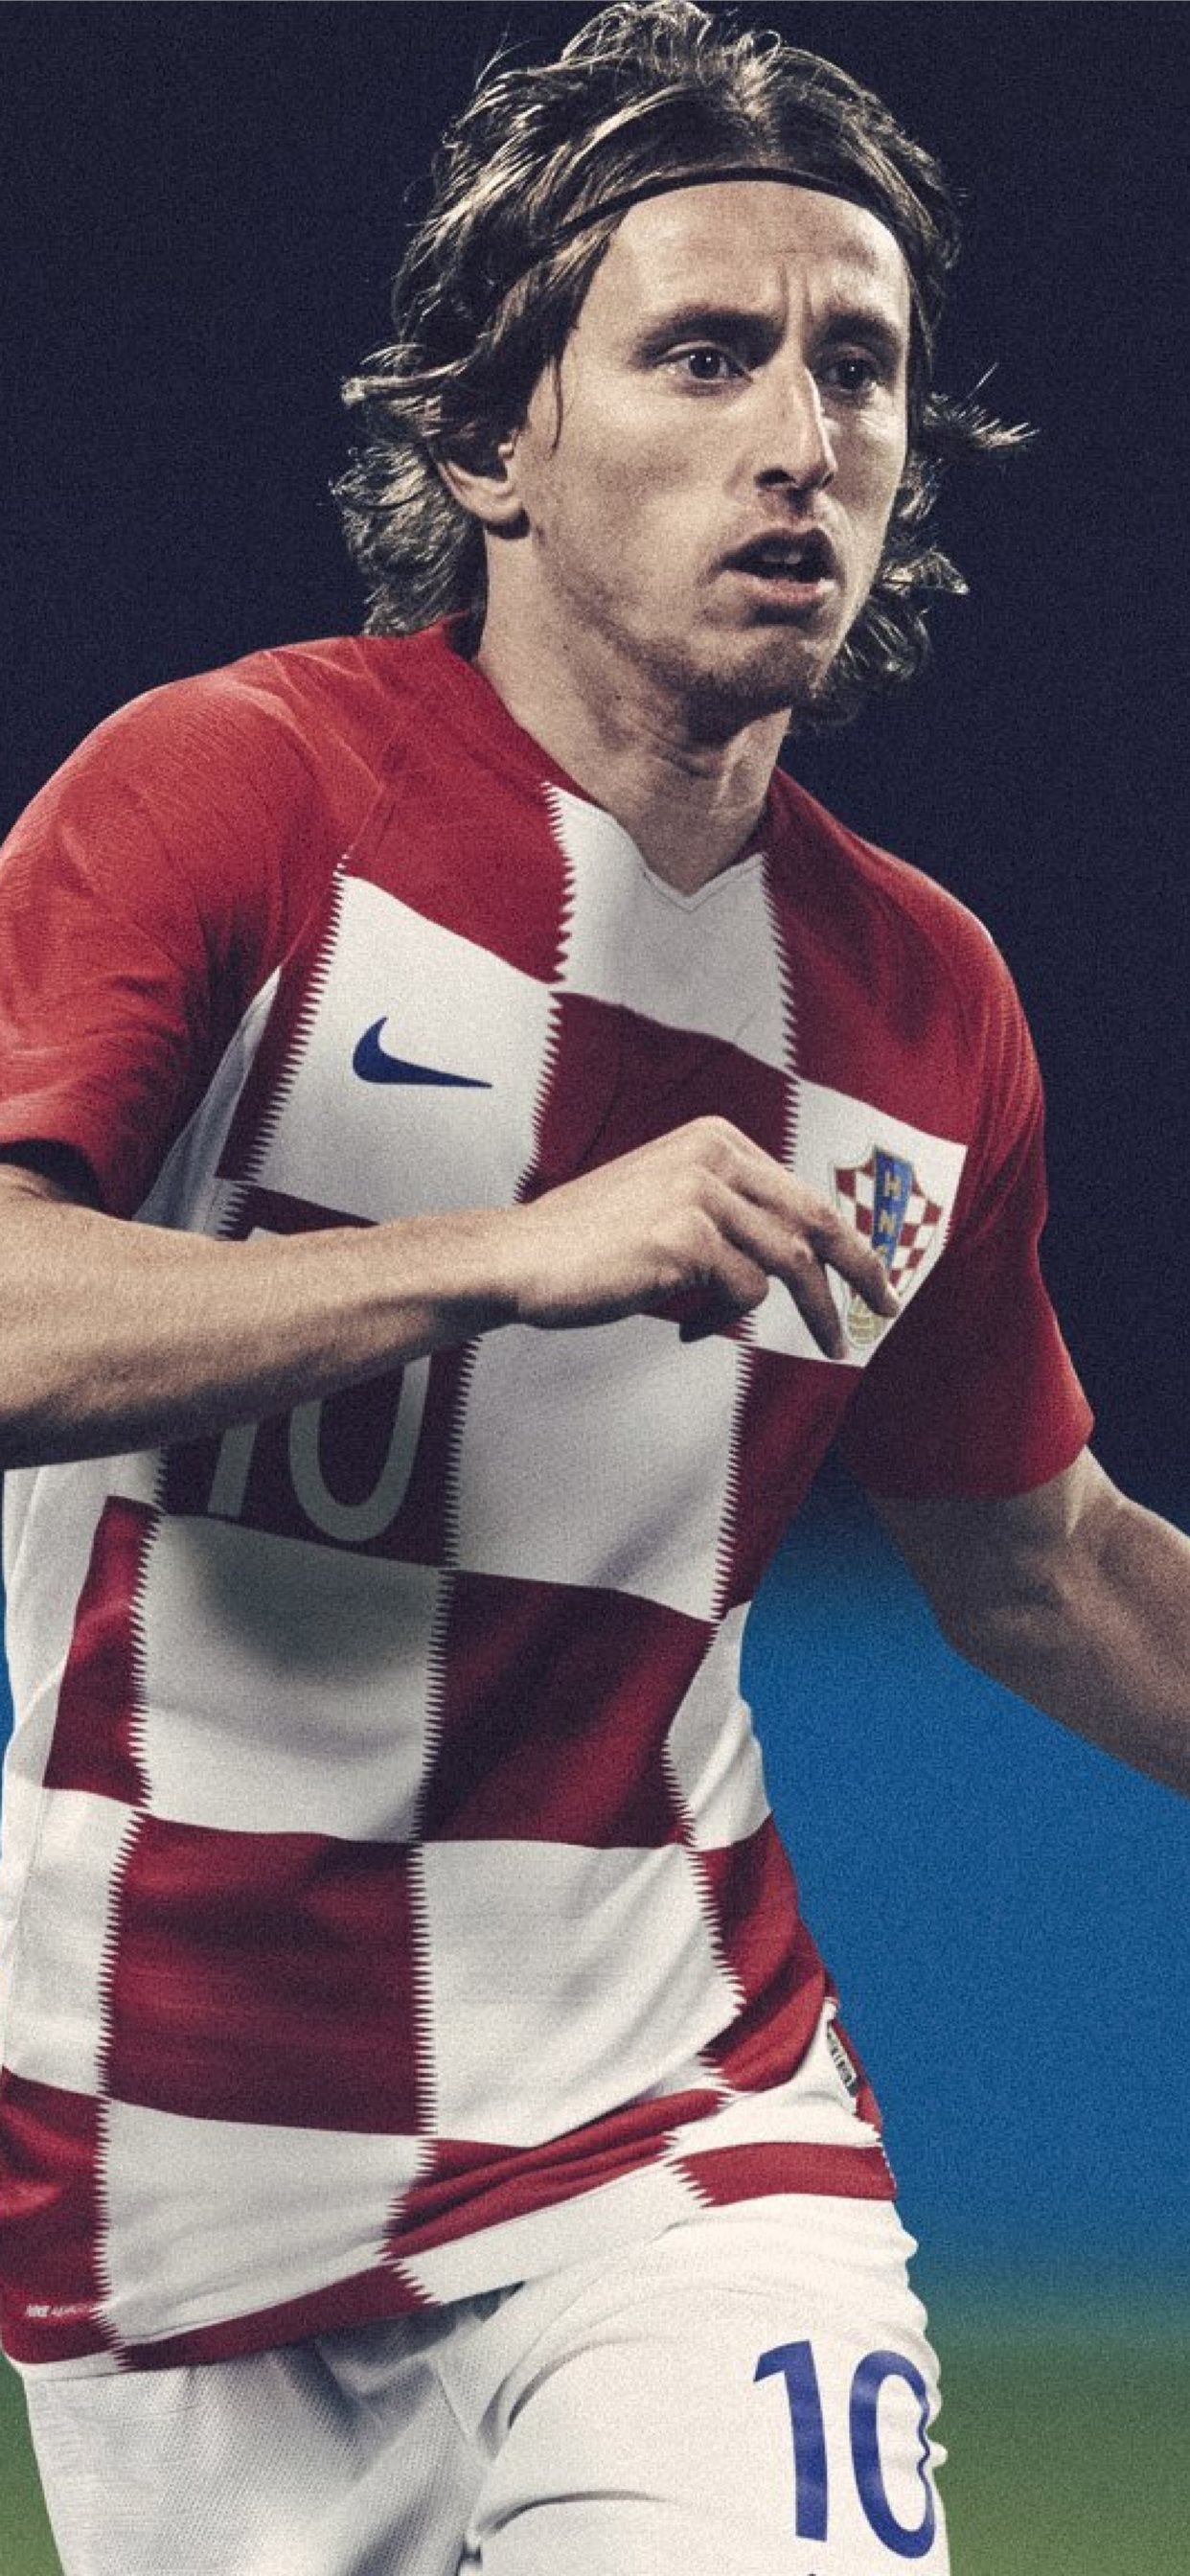 Croatia Luka Modric Fifa 2018 Wallpapers